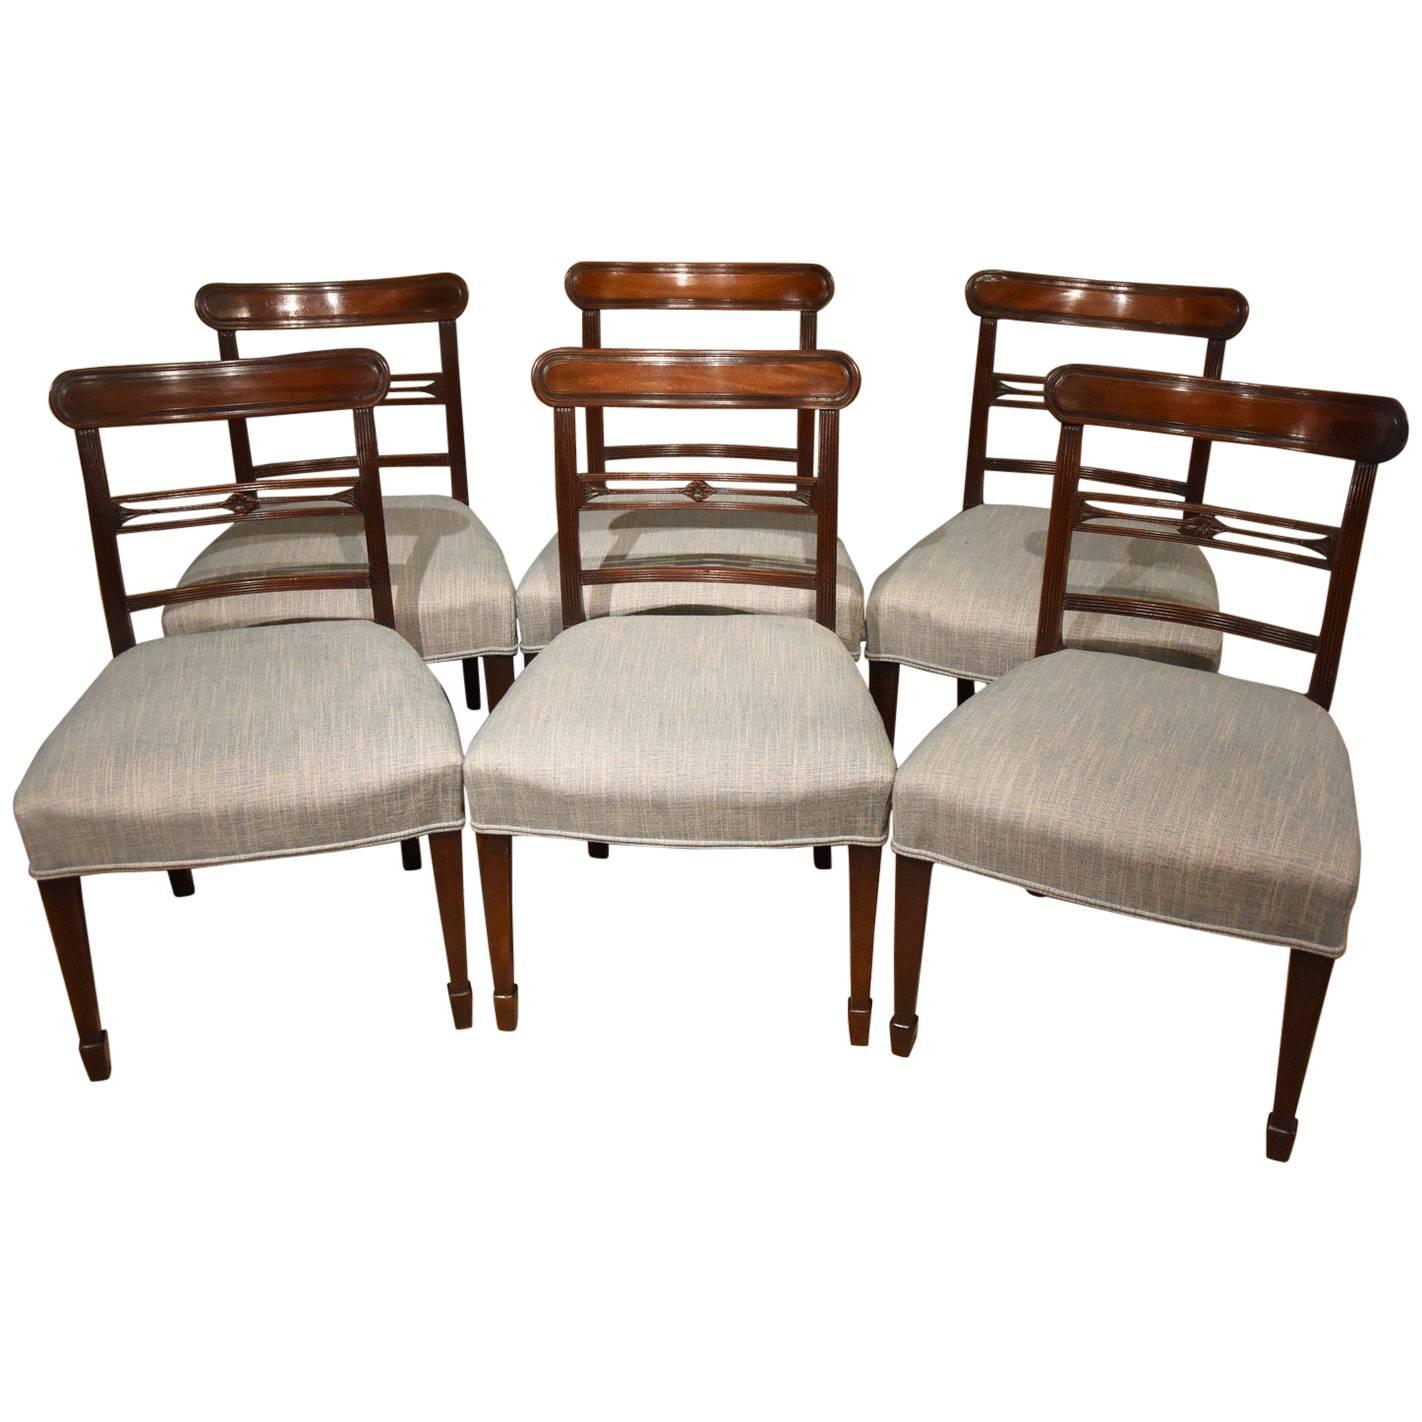 Set of Six Regency Period Mahogany Dining Chairs